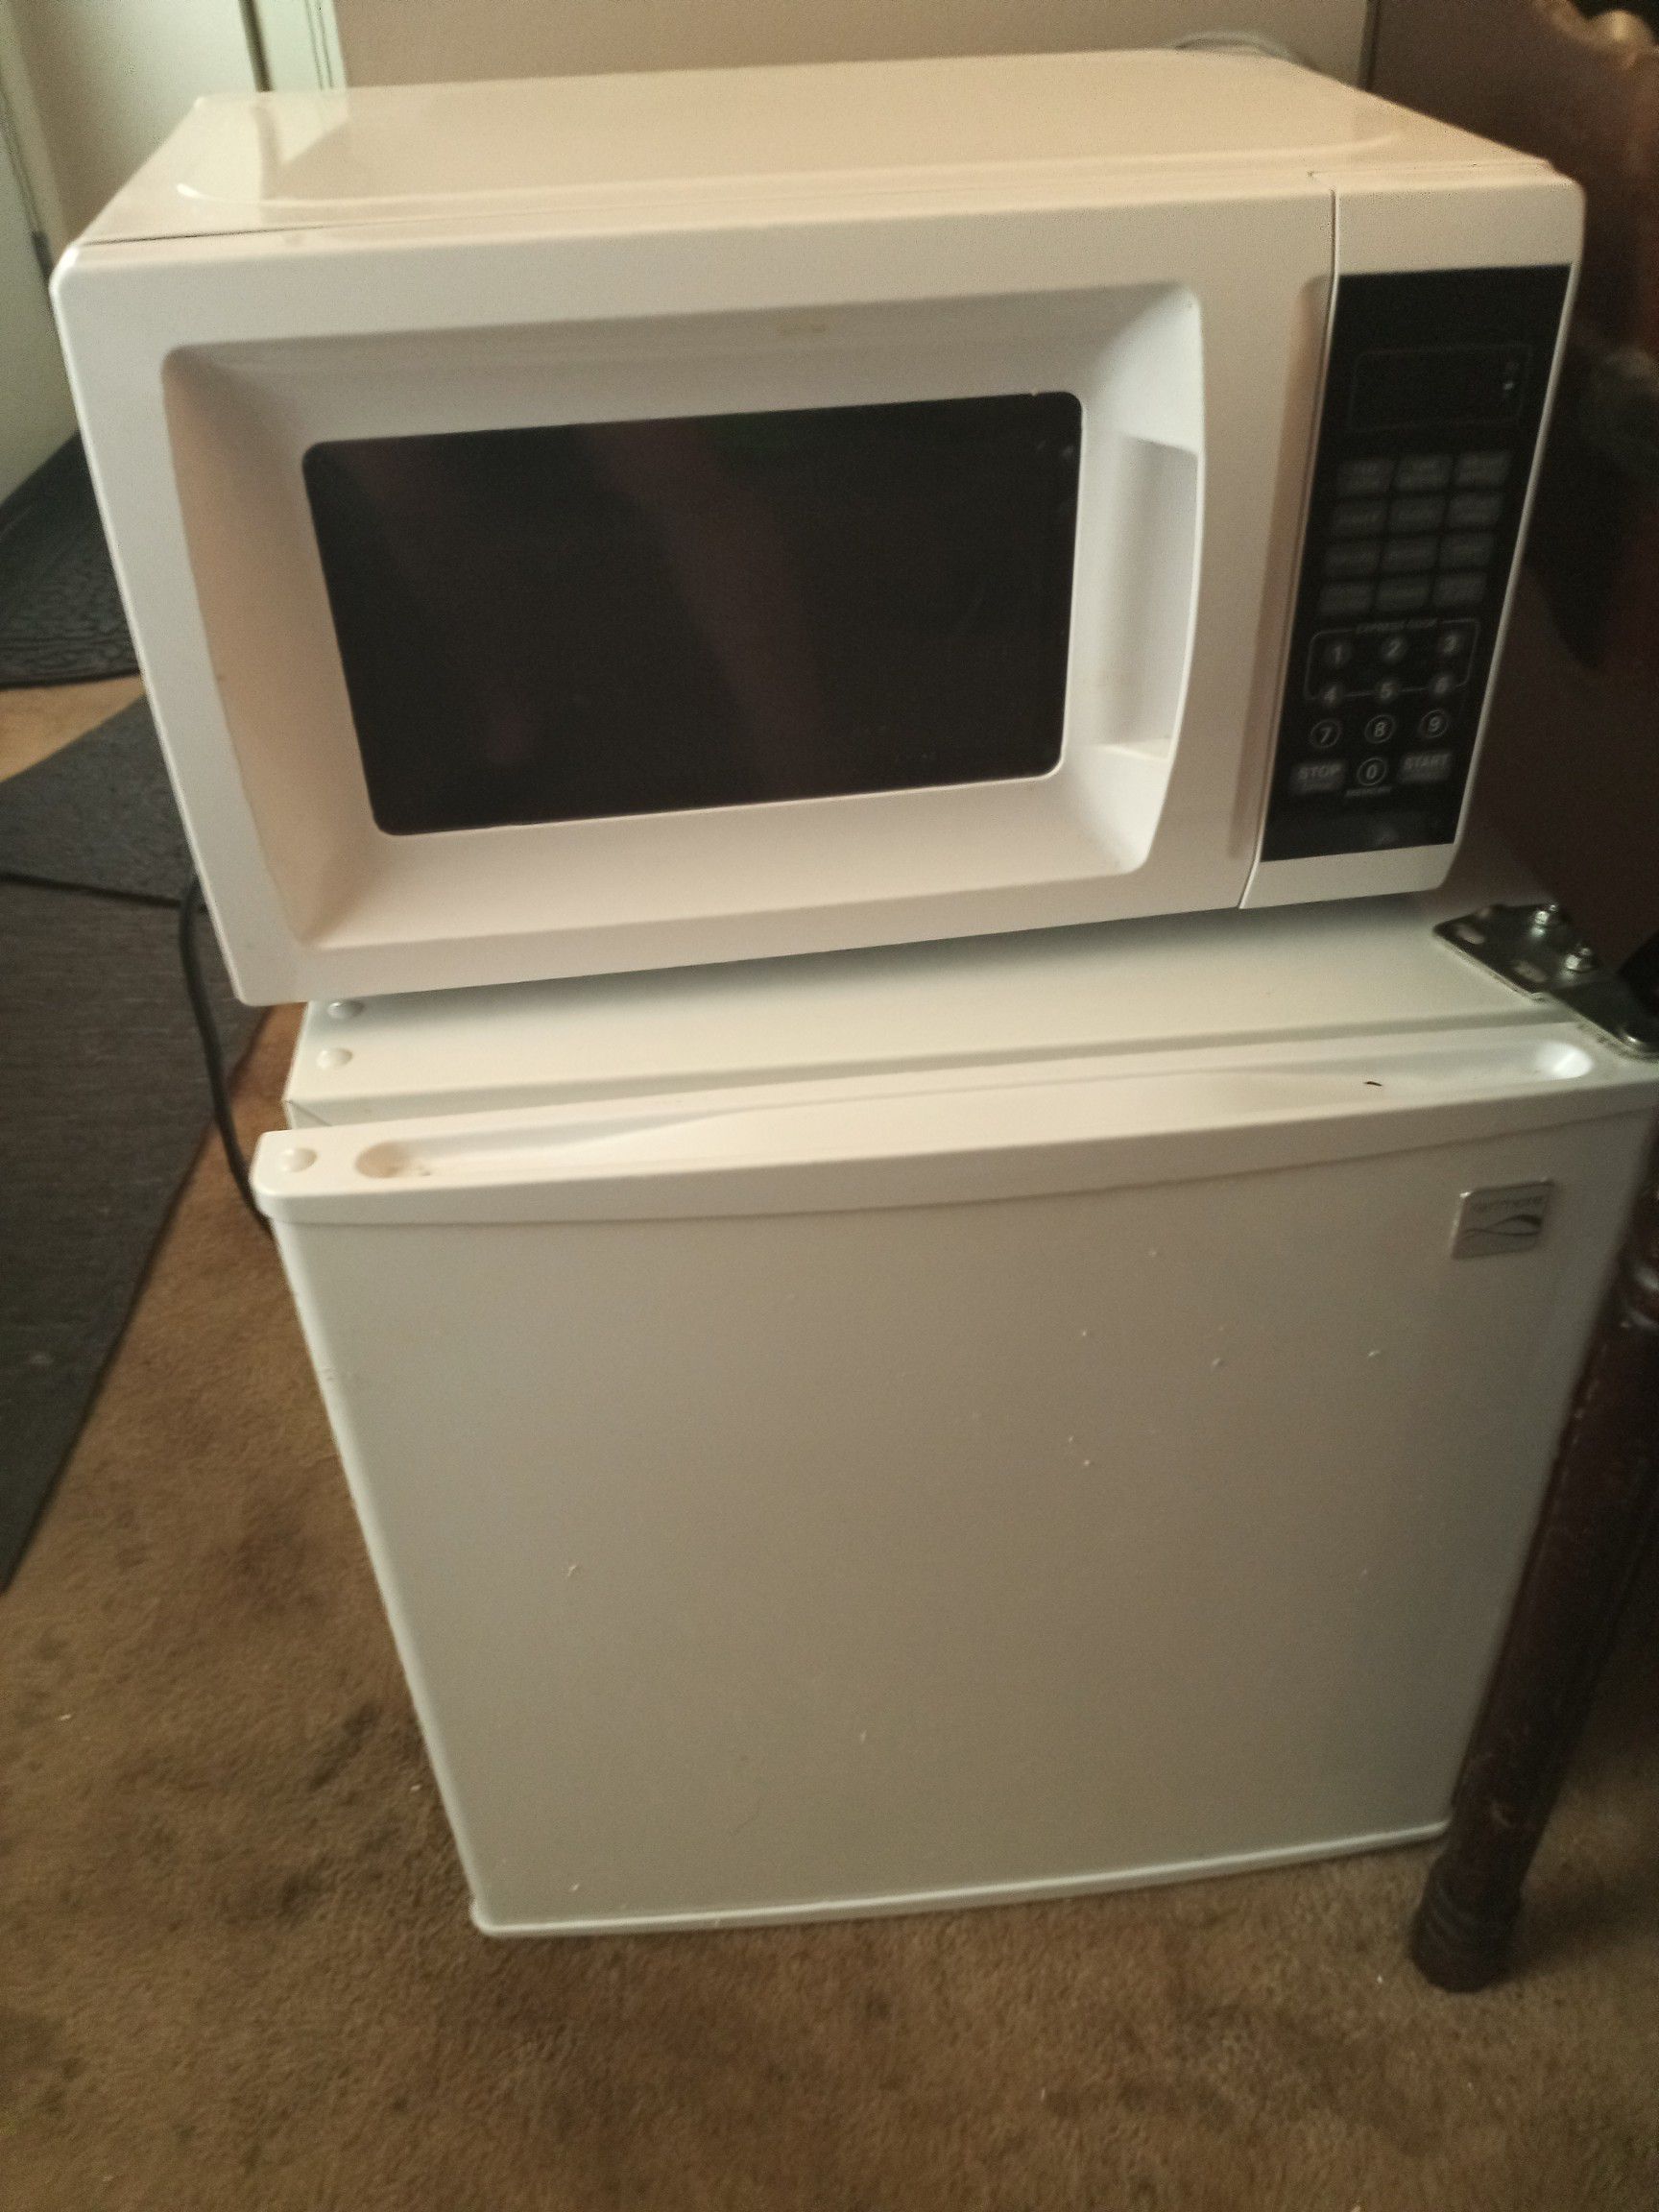 Microwave and mini-fridge with freezer